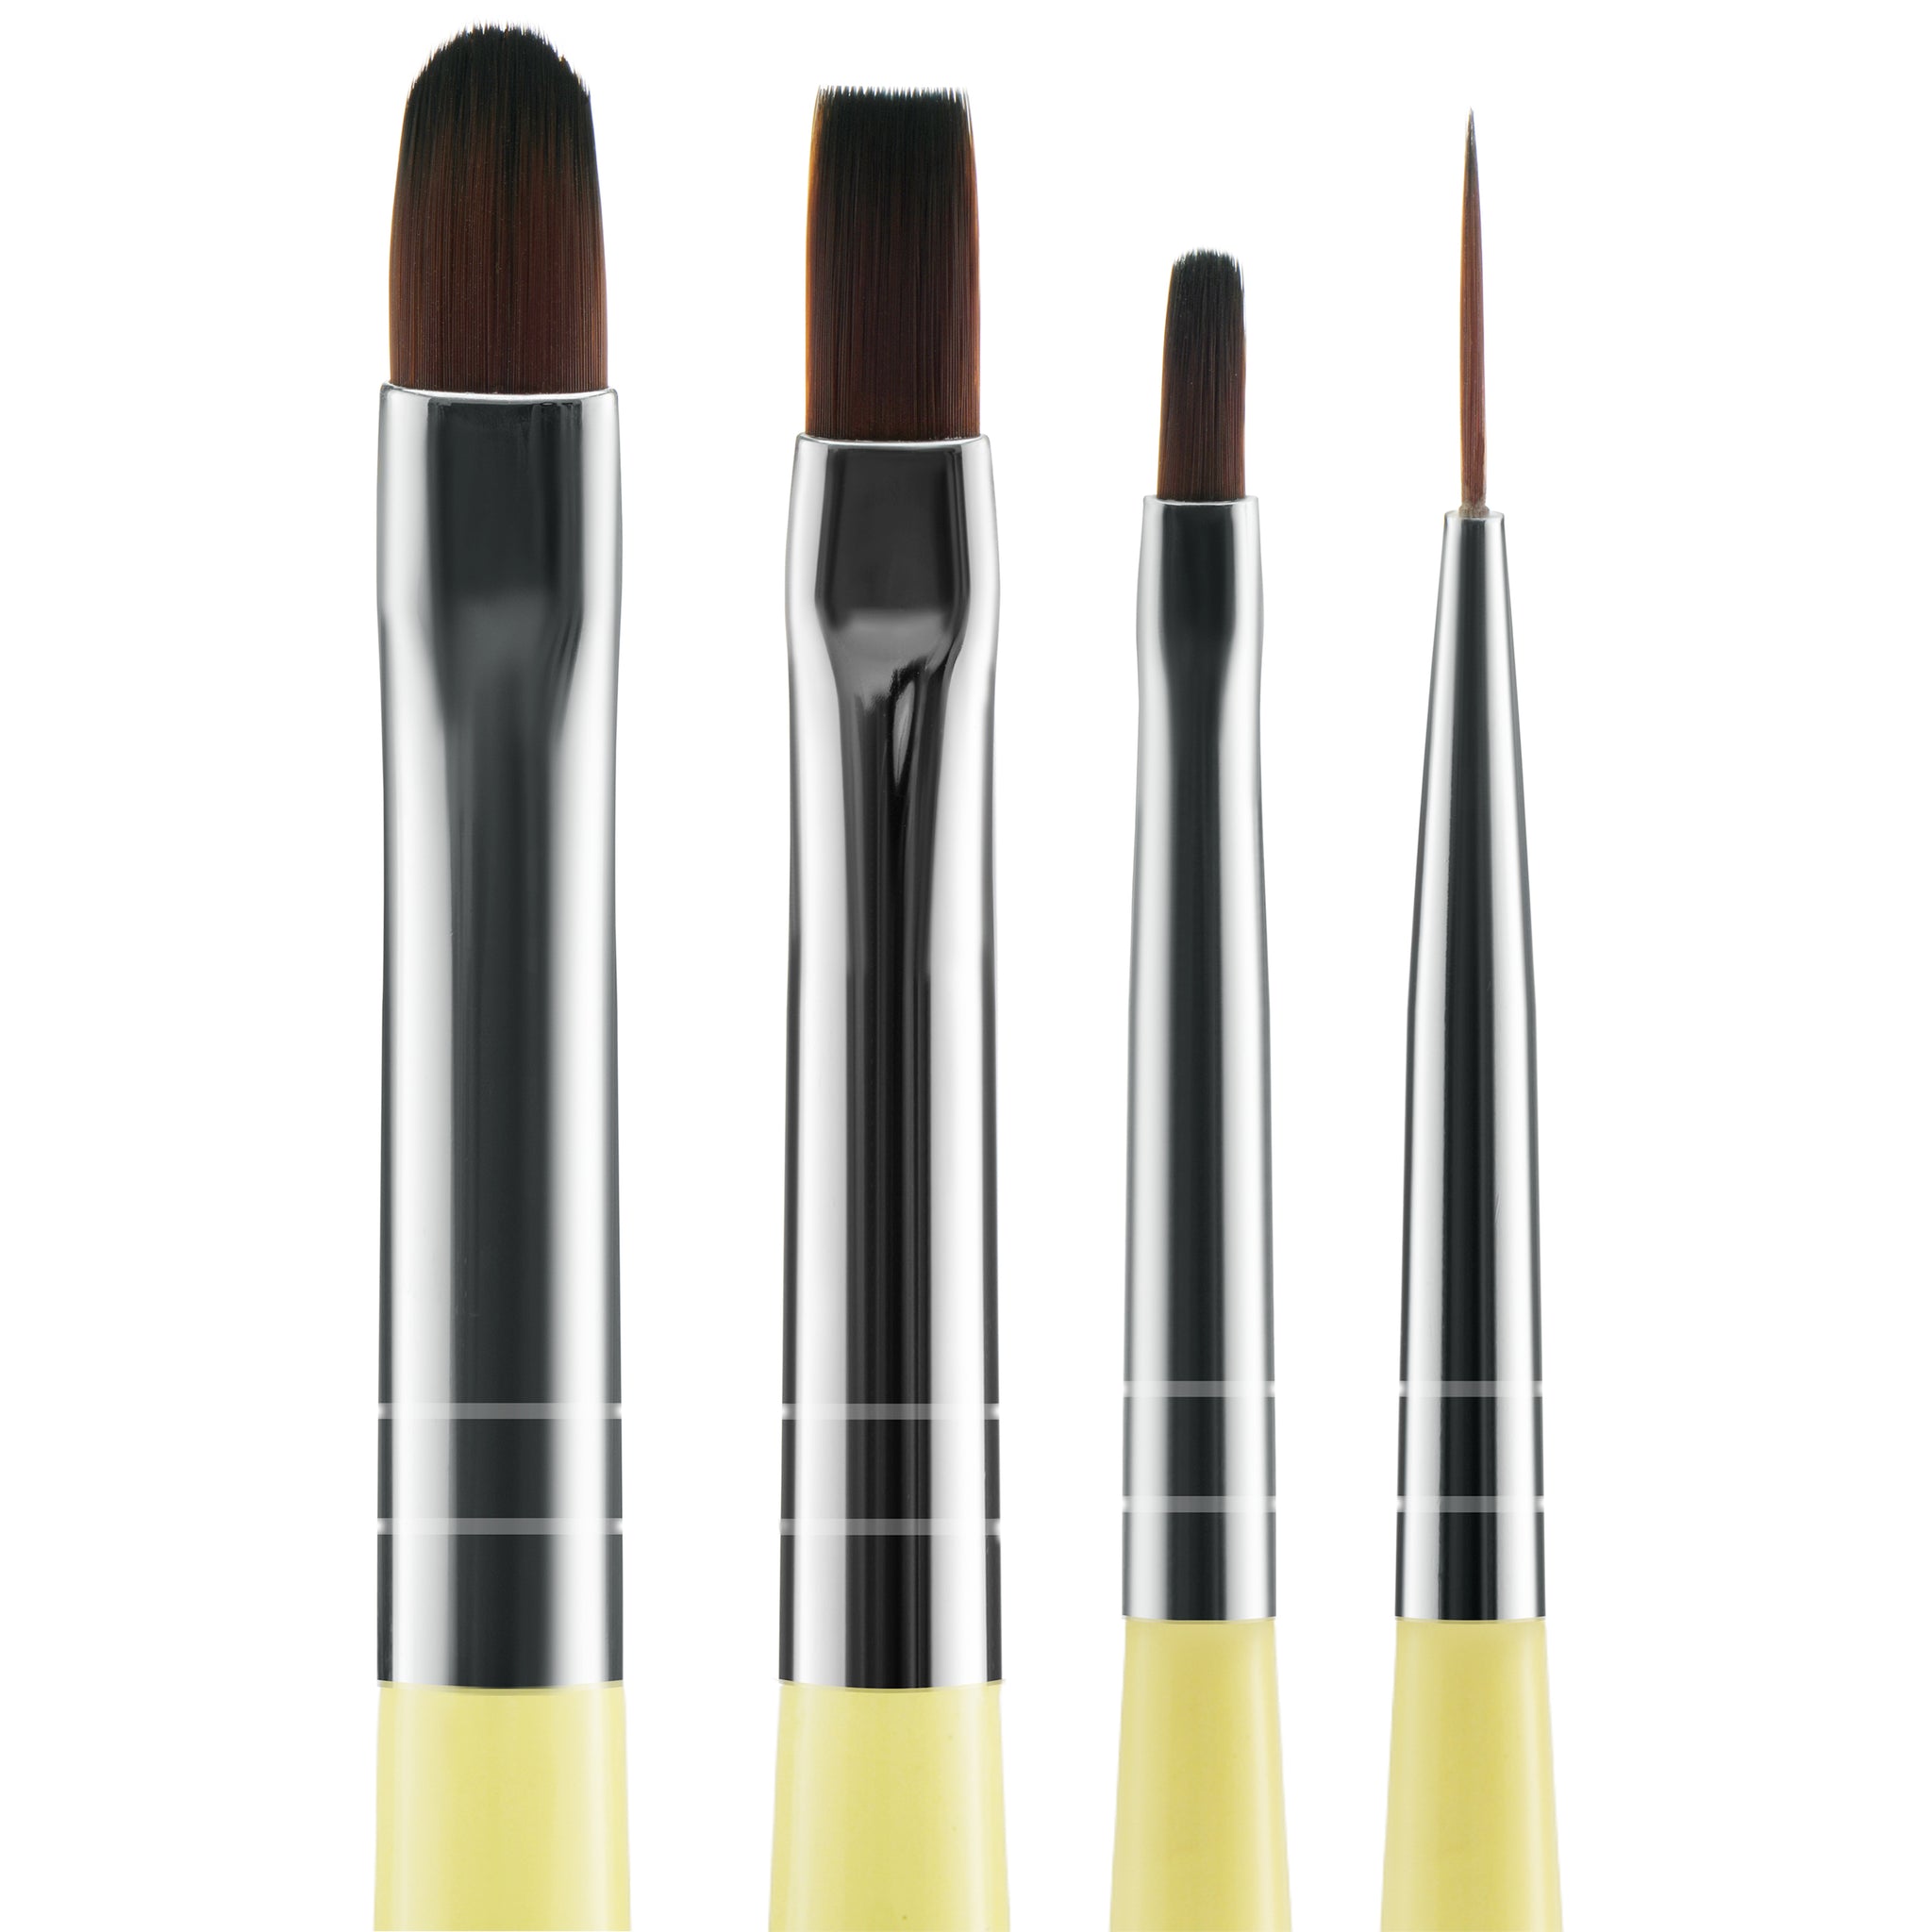 5PCs/Set Acrylic Nail Art UV Gel Carved Pen Brushes Nail Detail Brush Nail  Beauty Tools 